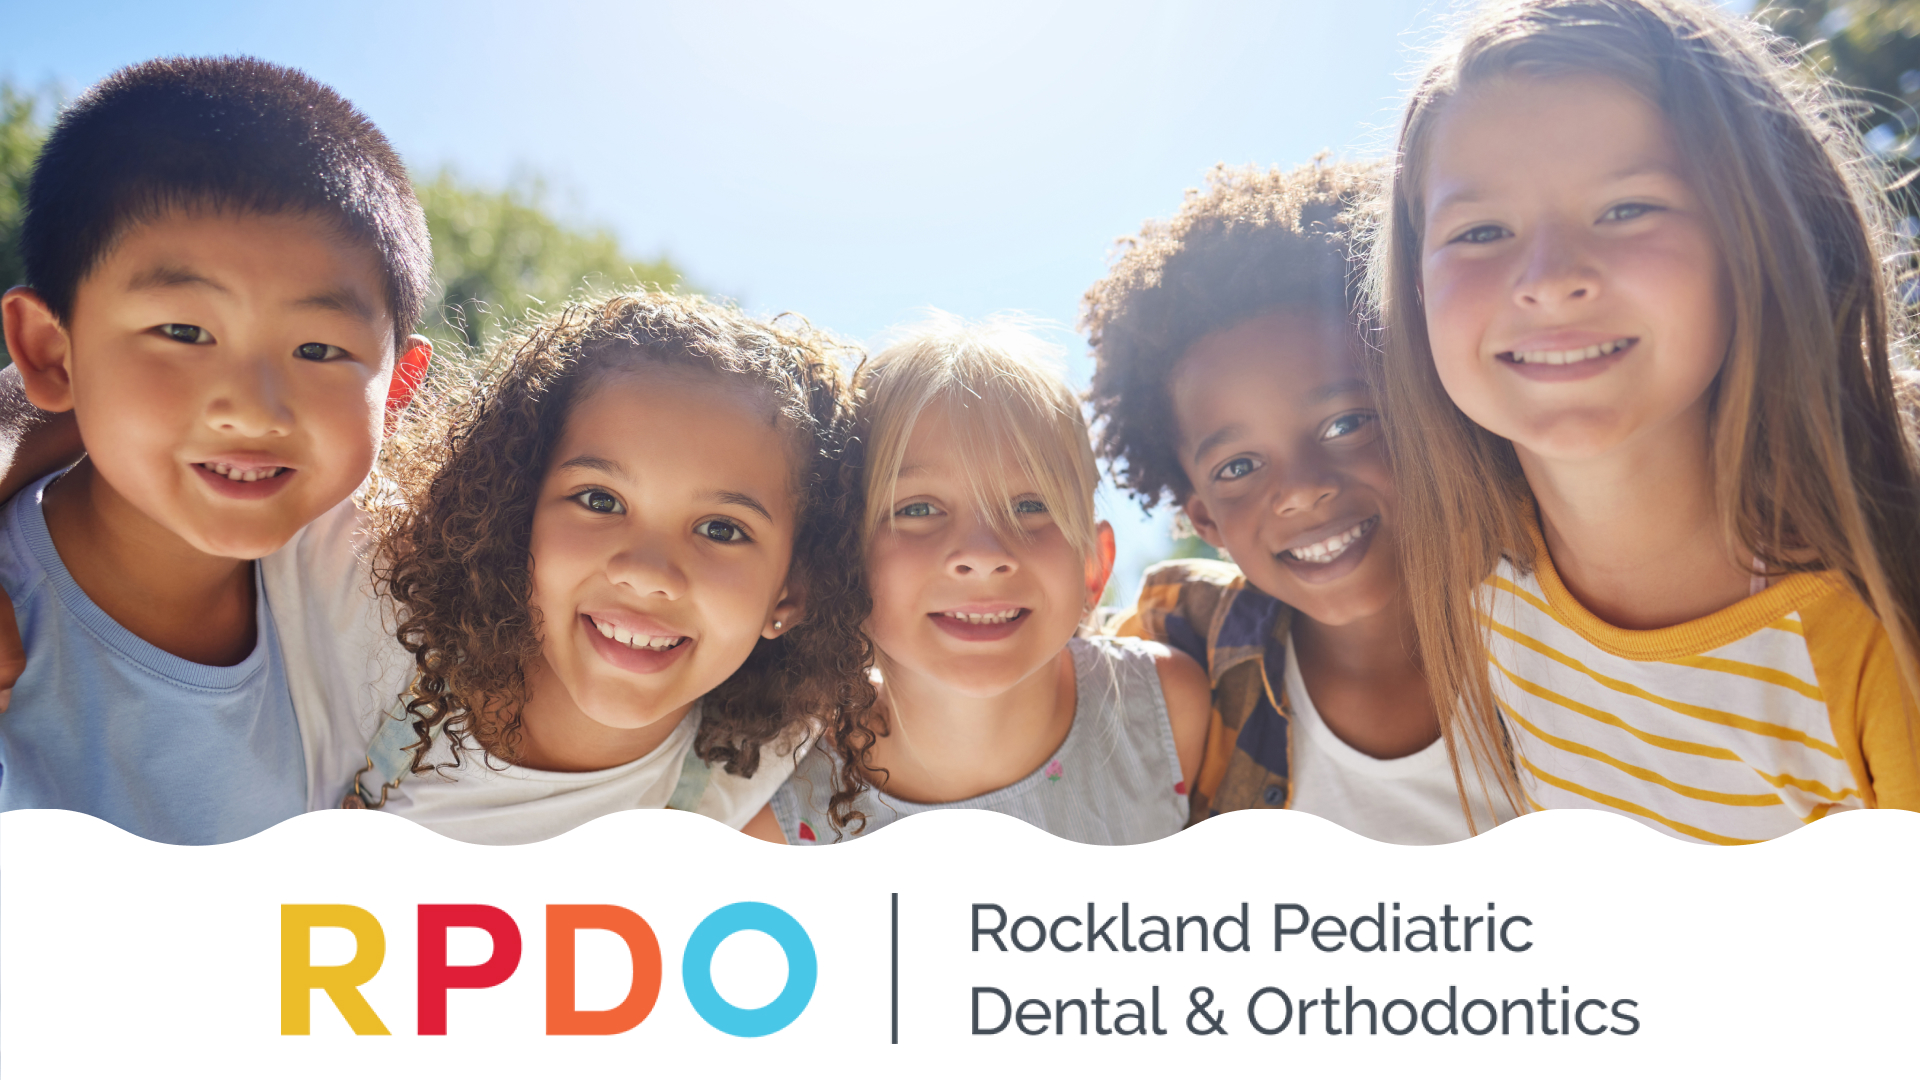 Rockland Pediatric Dental and Orthodontics